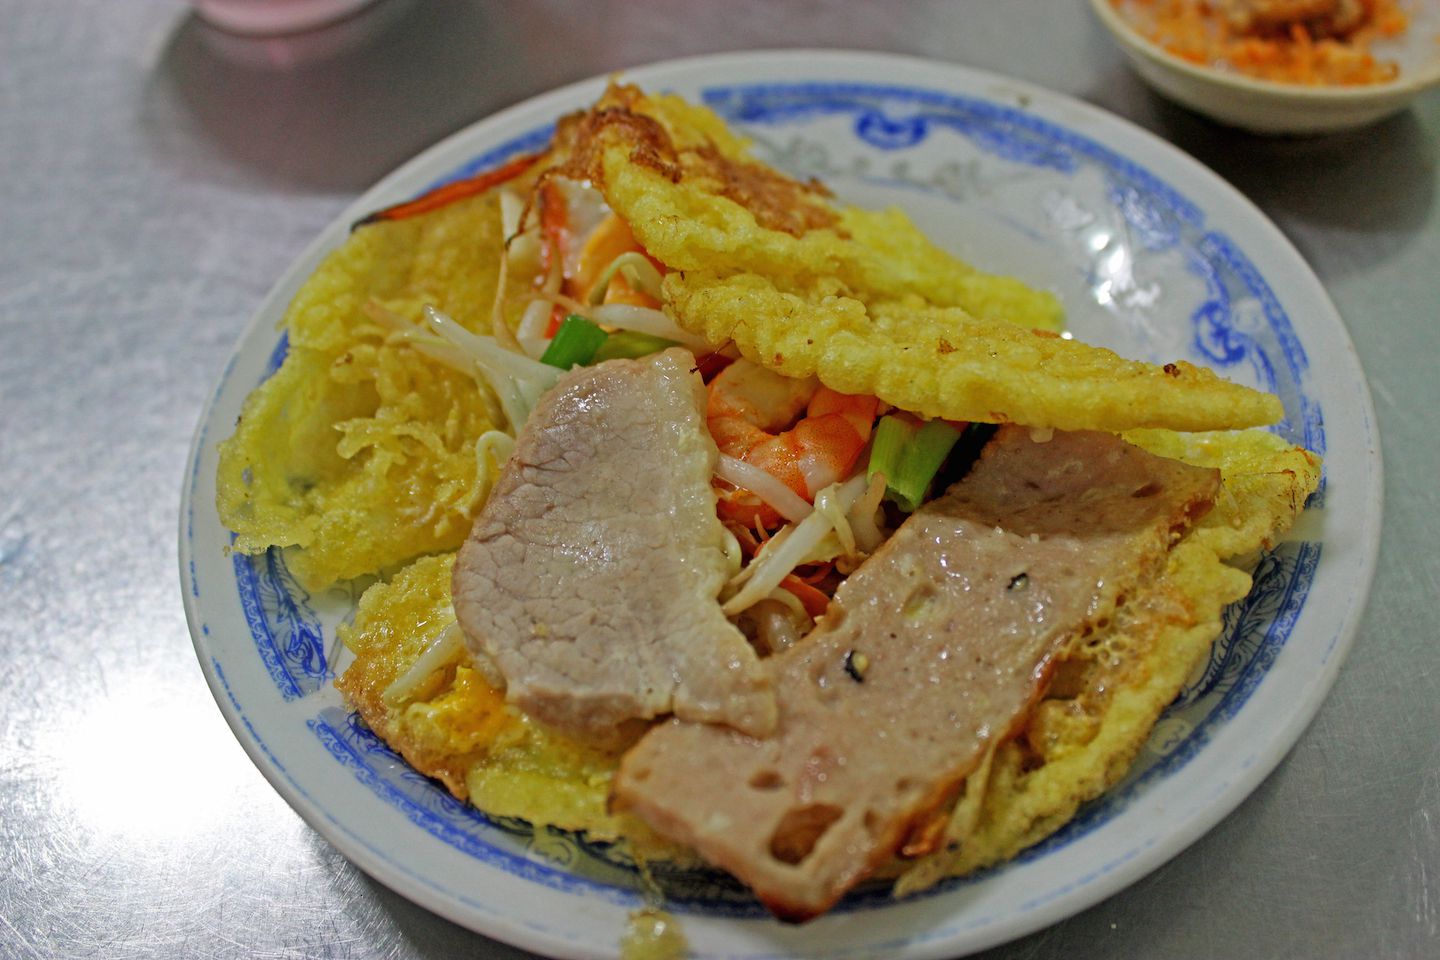 Banh khoai in Hue - rice pancake